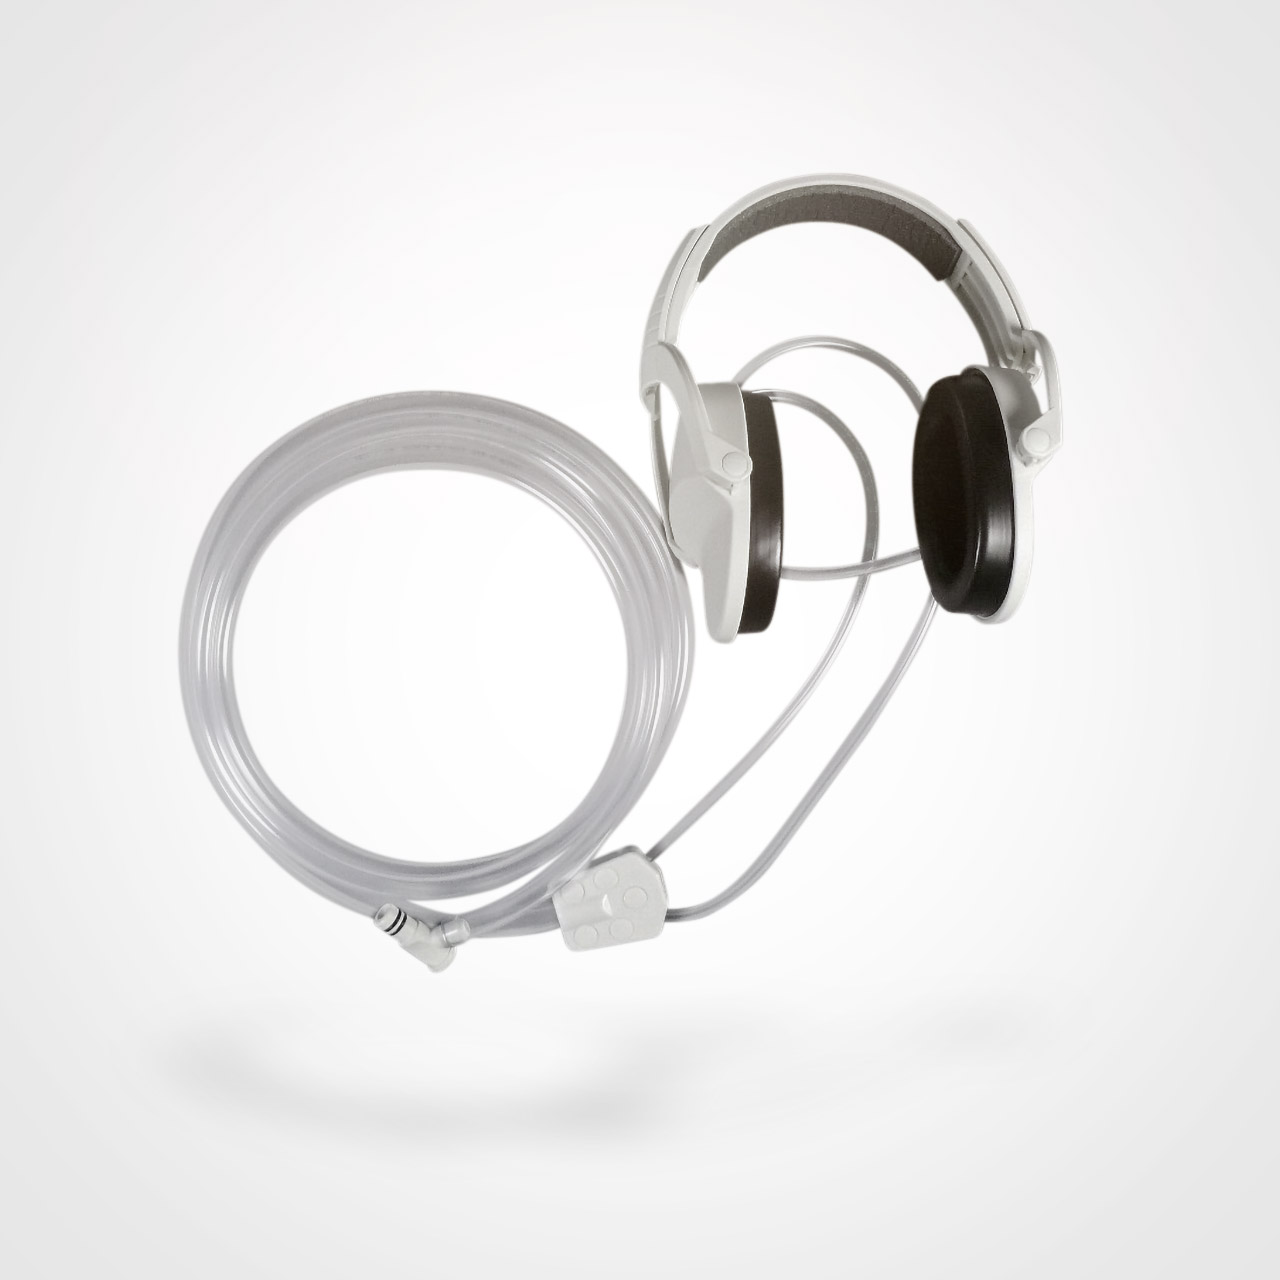 Headphones - 10018373 - Siemens Healthineers United States